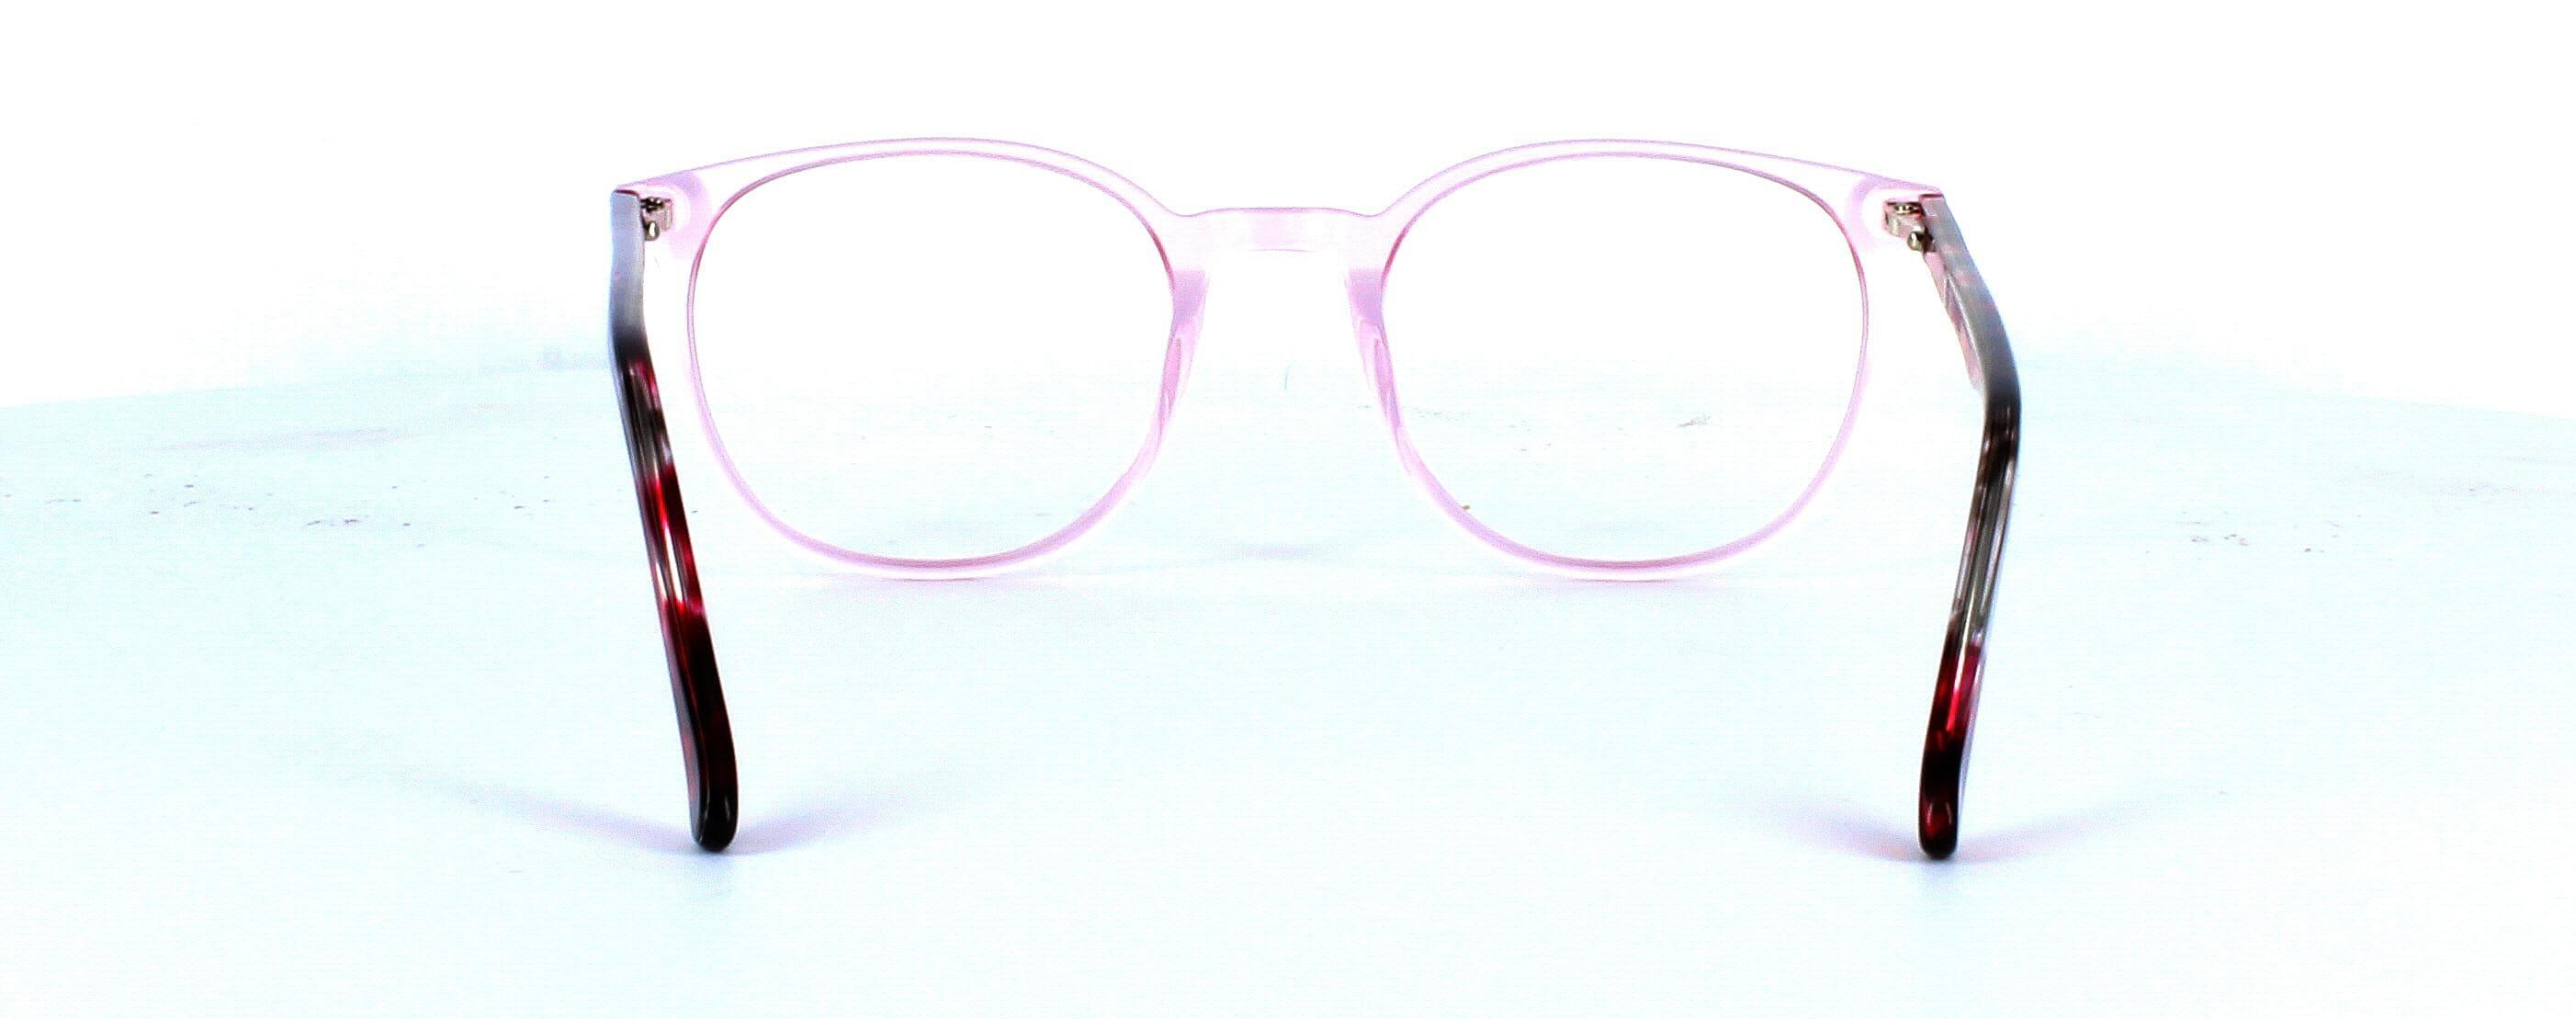 Venatici - Ladies crystal pink plastic glasses - image view 3